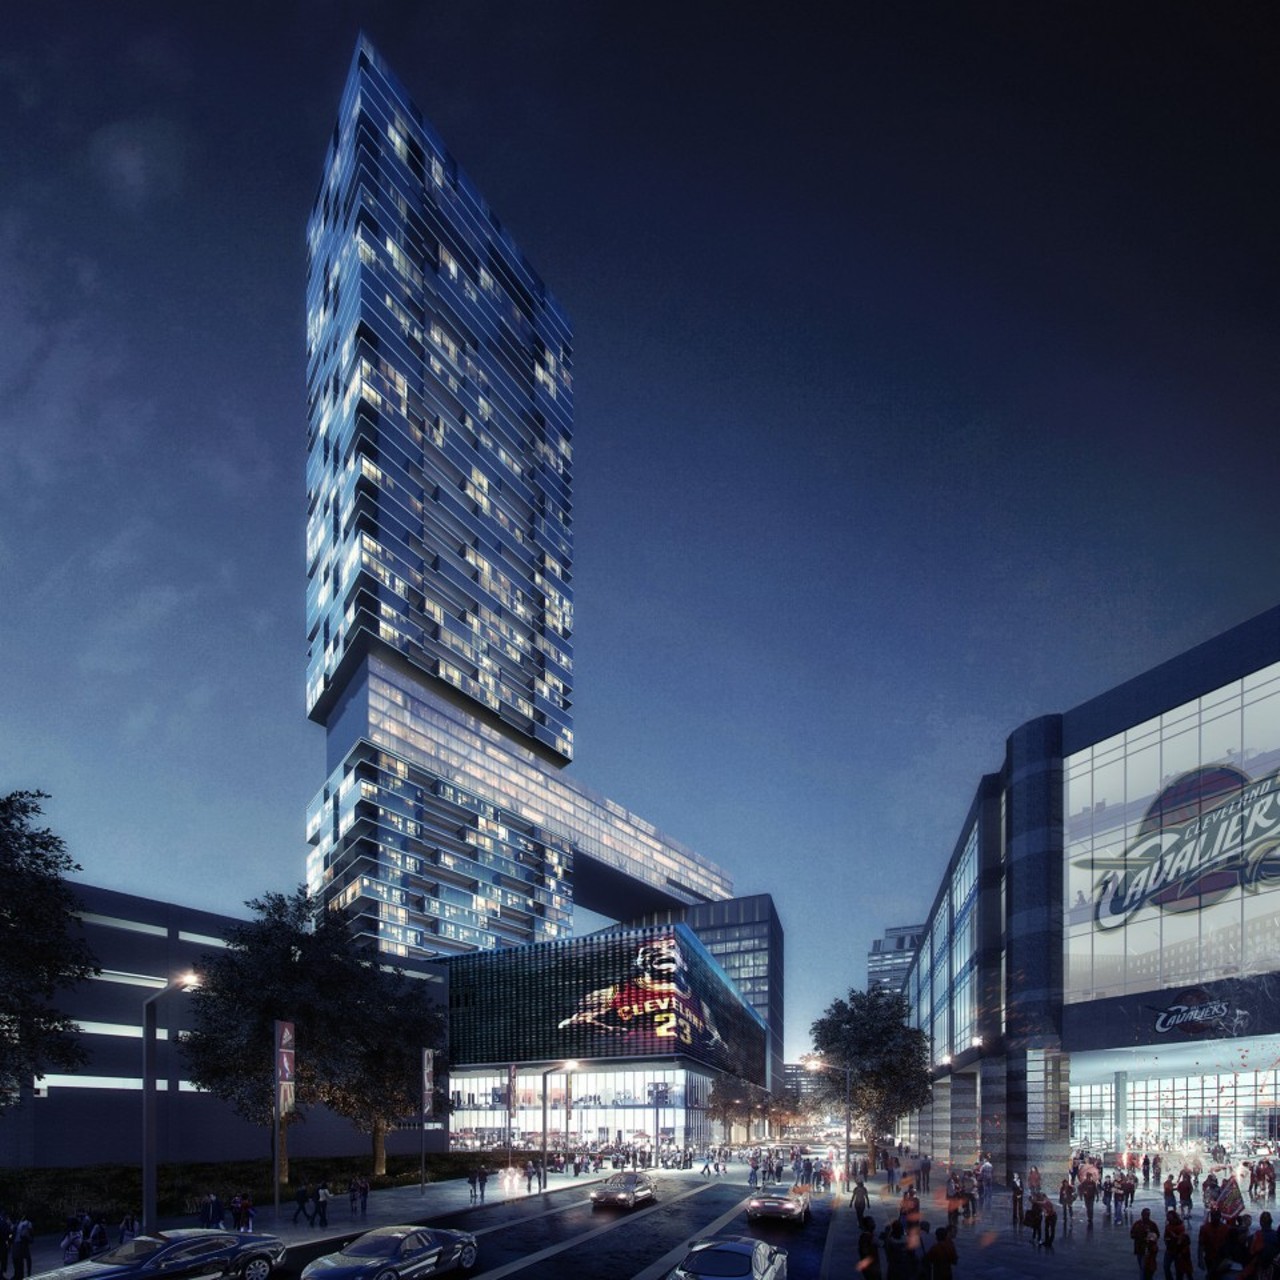 nuCLEus Project | 54 stories | Up to 500 units | Gateway District